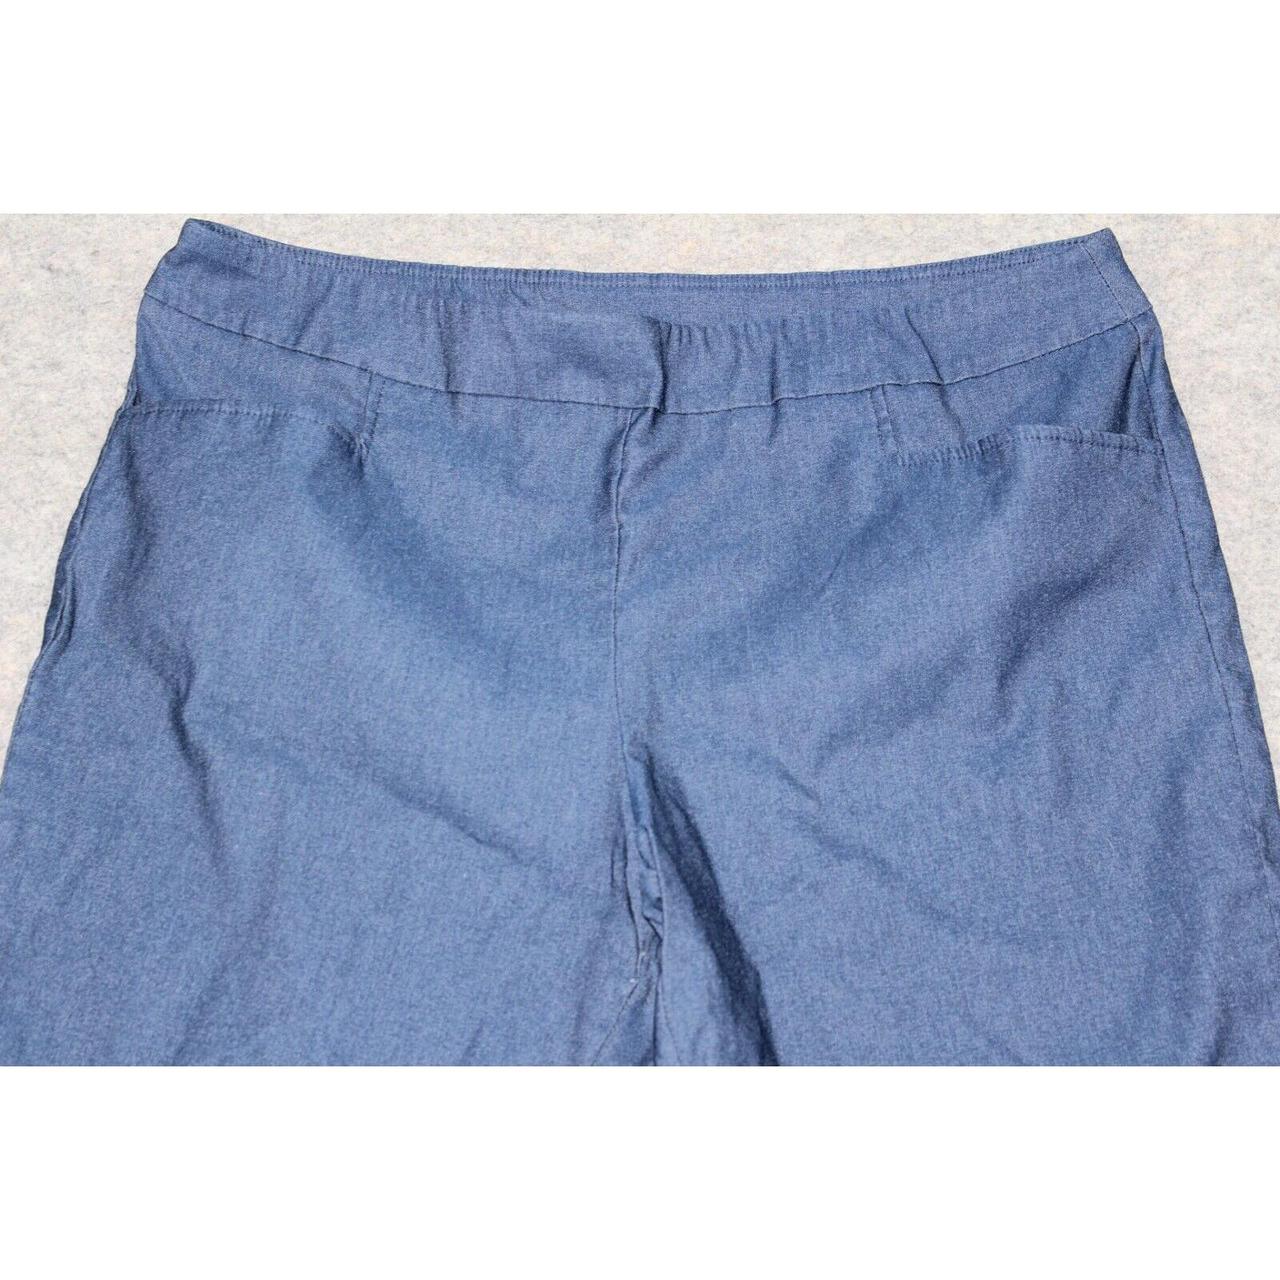 Timex Women's Blue Shorts (2)